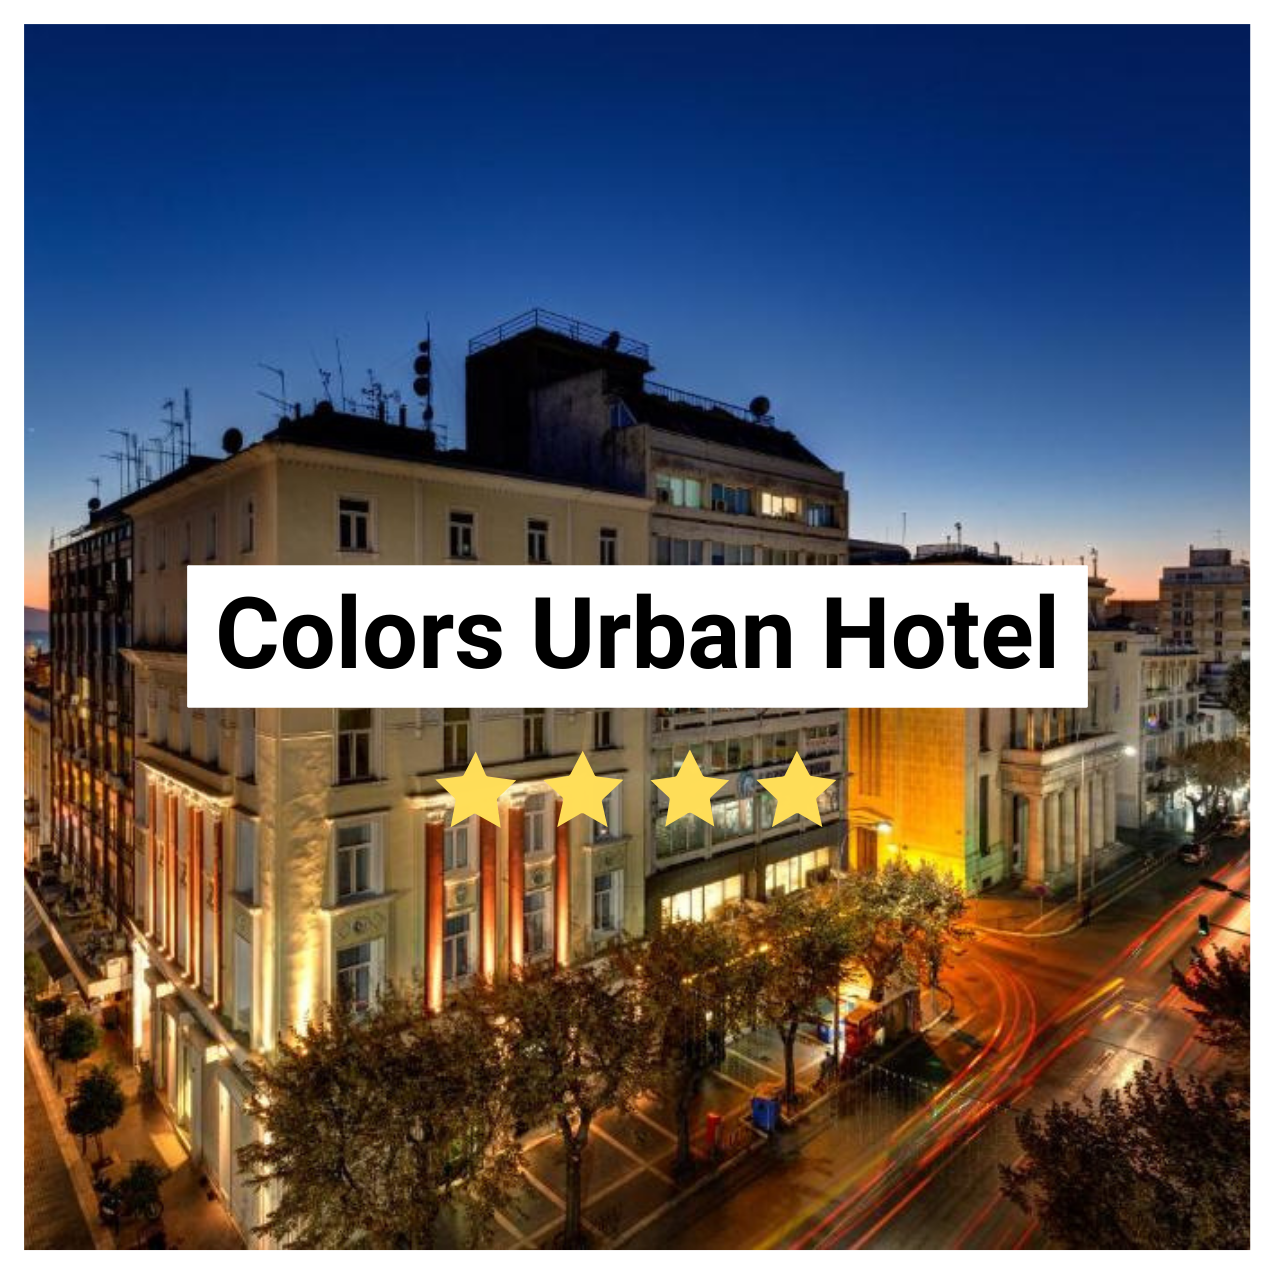 Colors Urban Hotel Image.